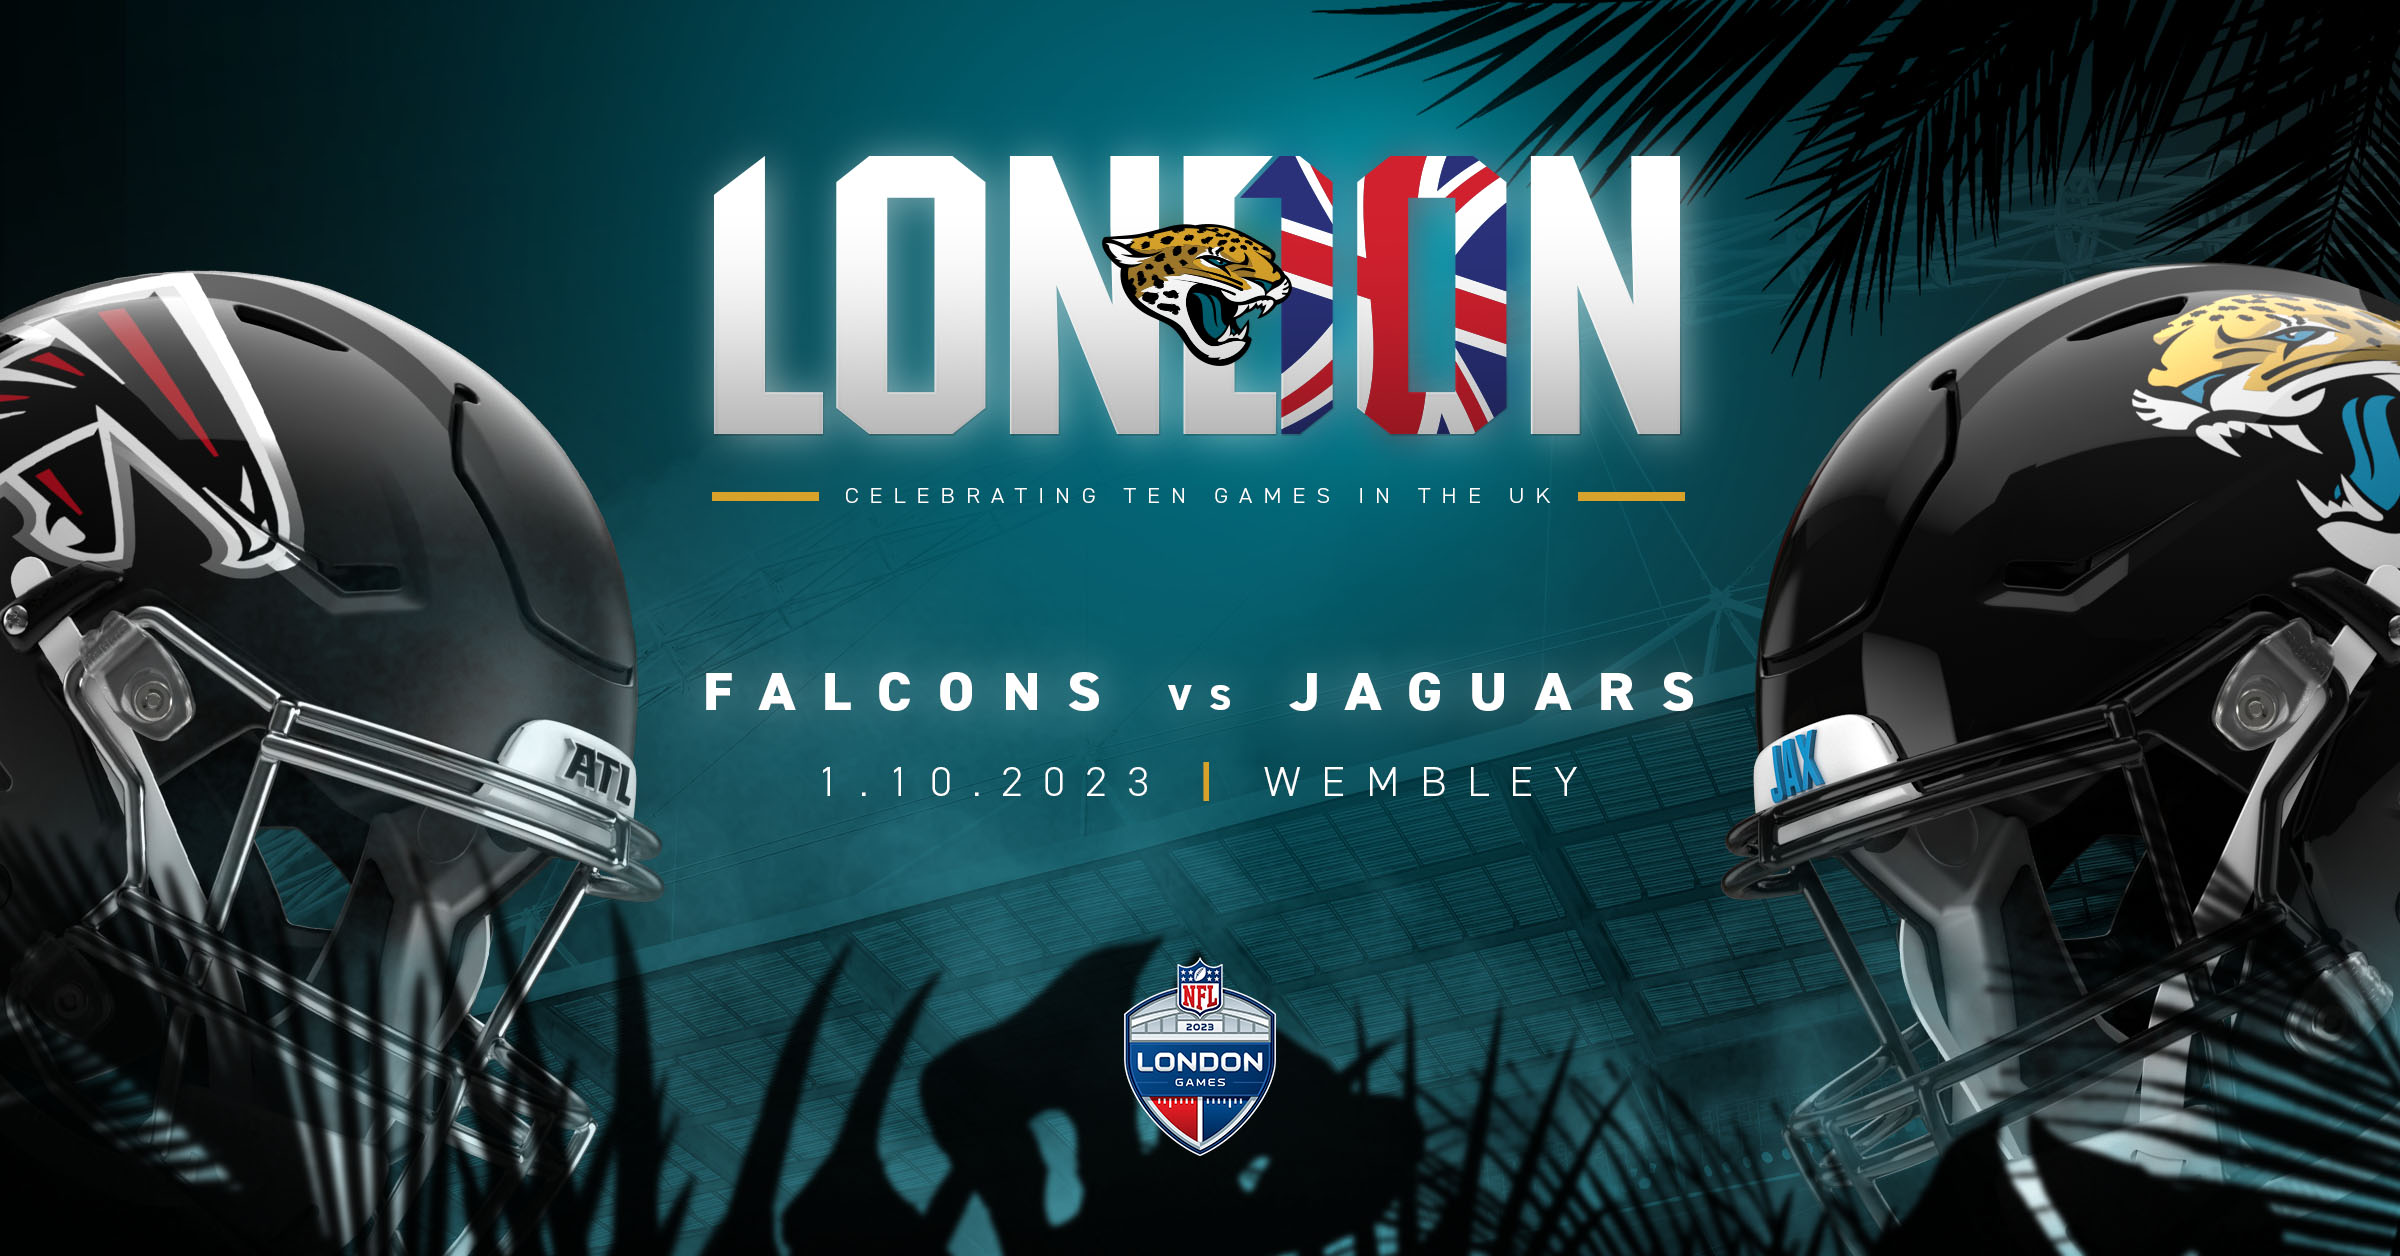 Falcons vs Jaguars